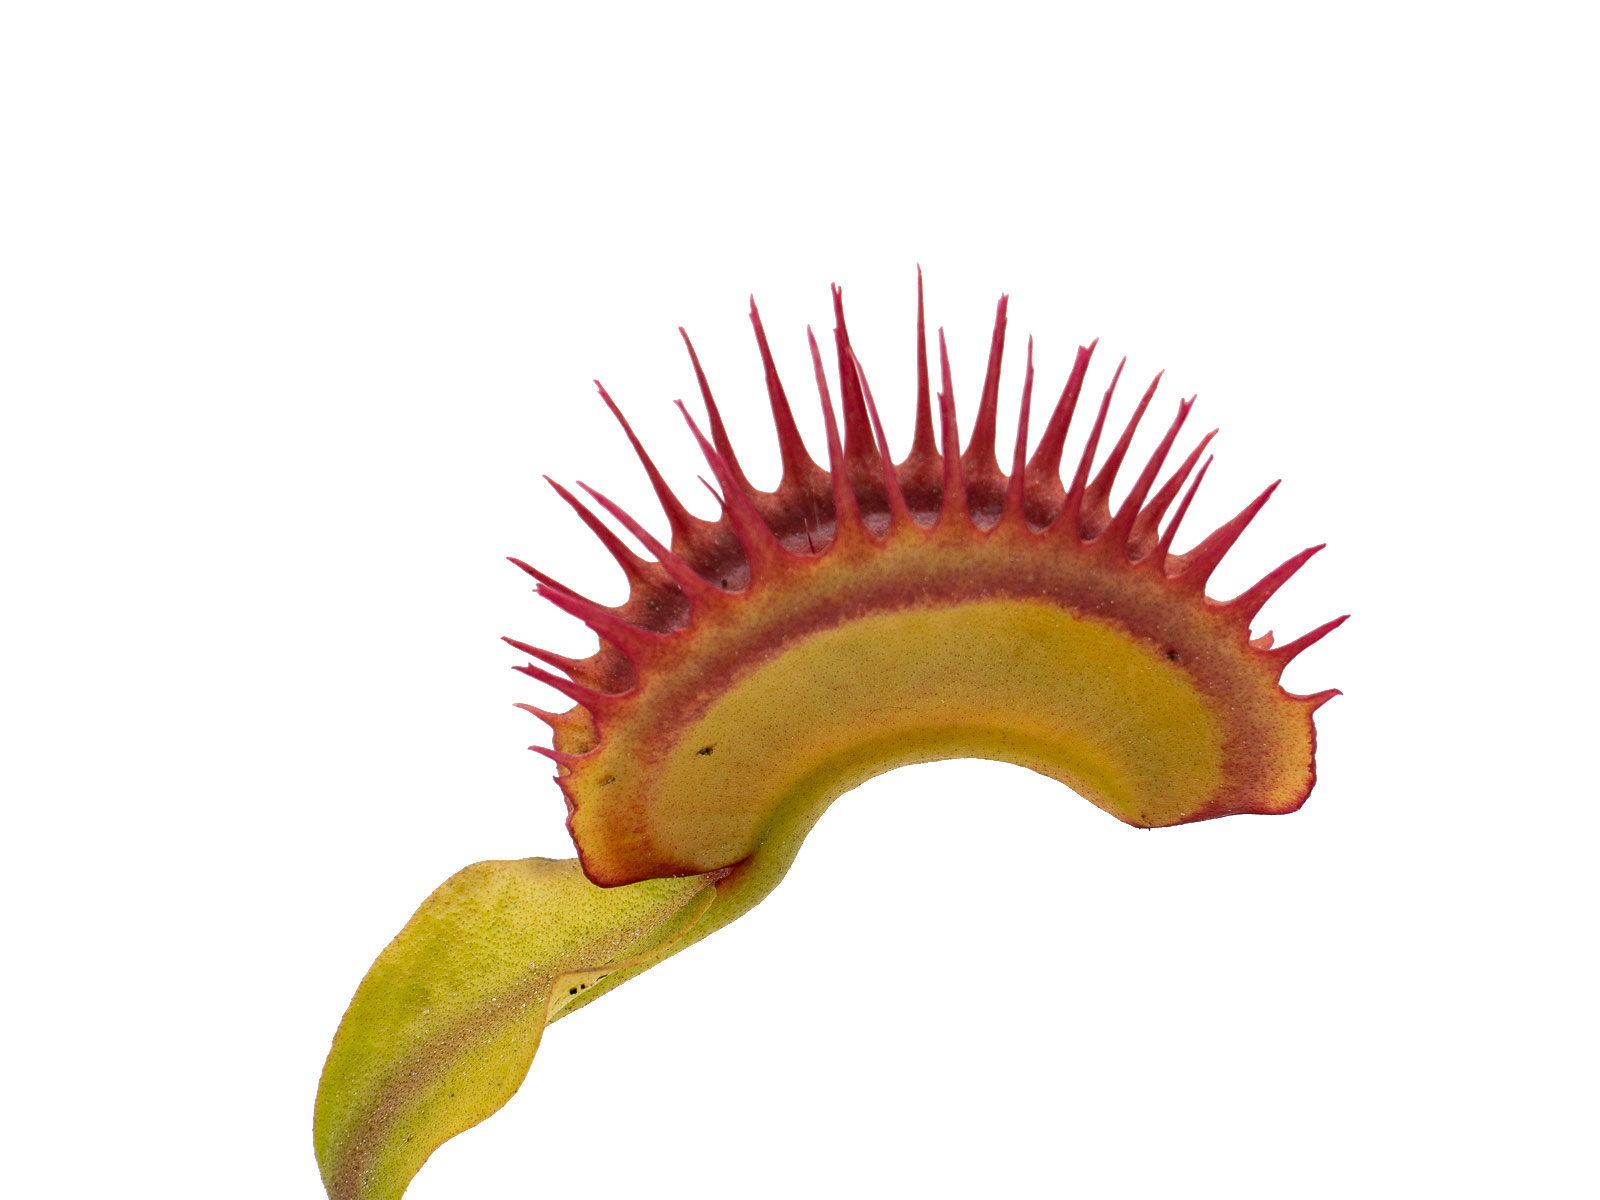 D. muscipula - Big Teeth Red Giant